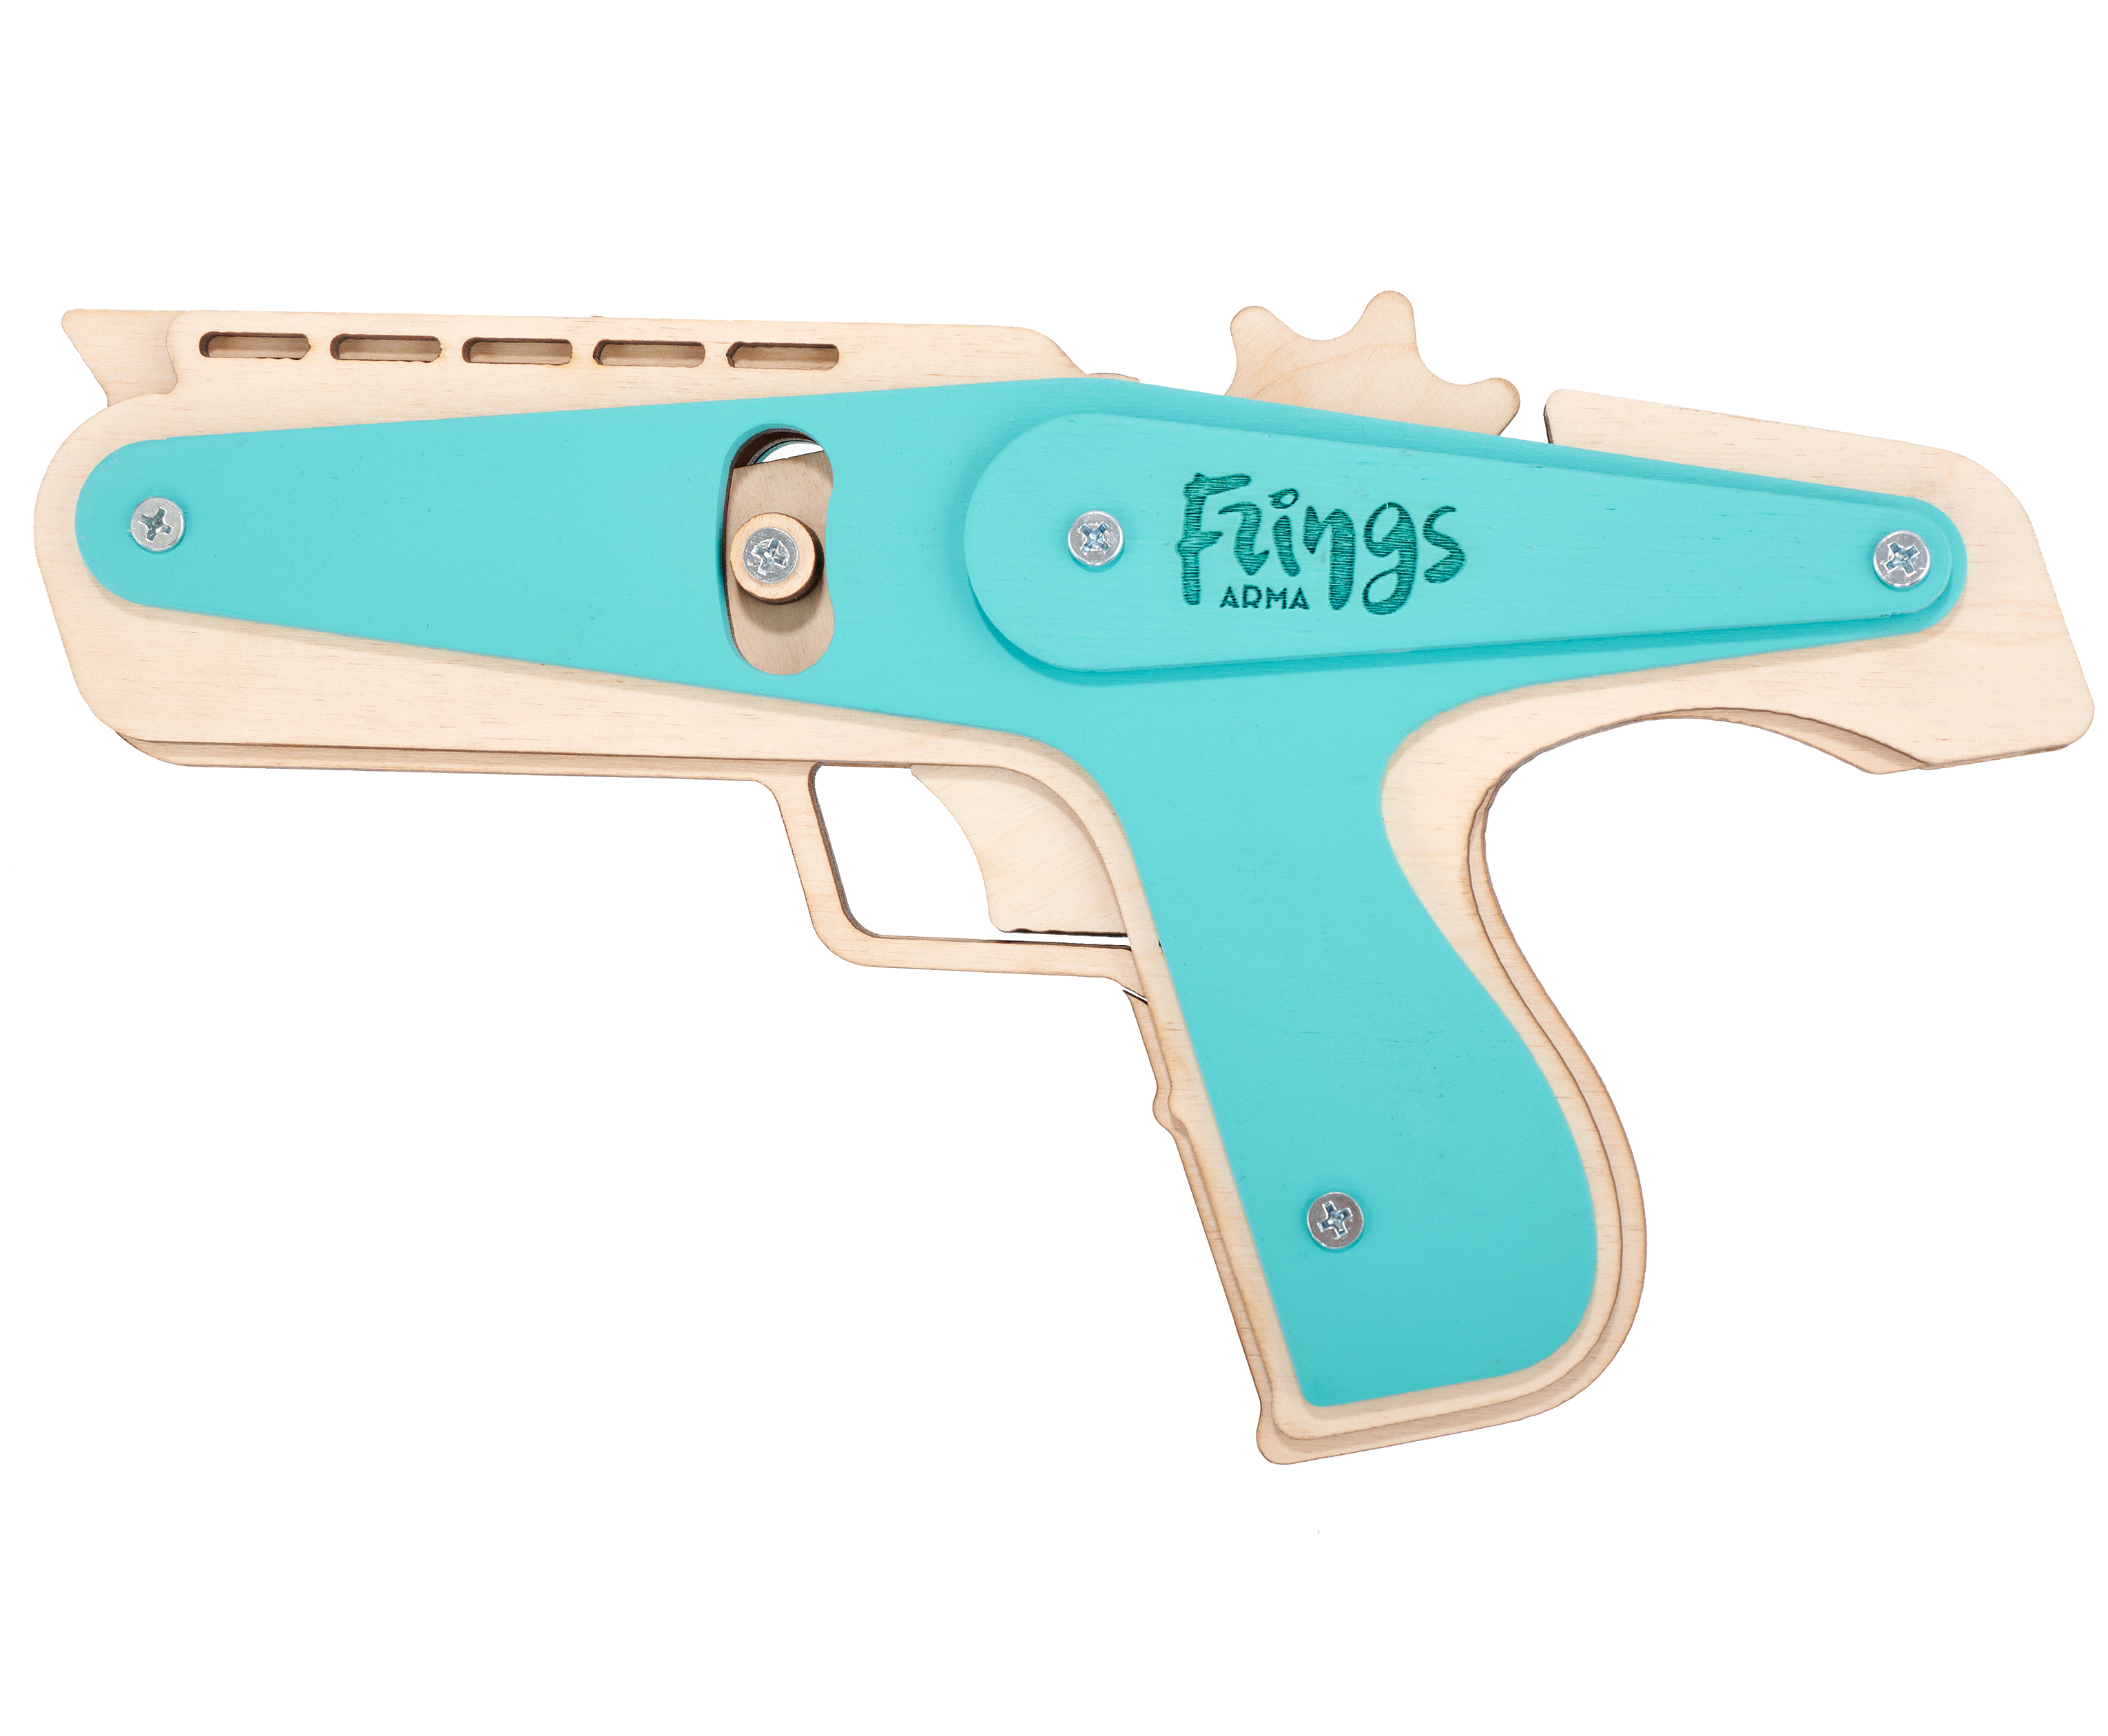 Резинкострел игрушечный Arma toys пистолет-пулемет Frings макет, АТ003